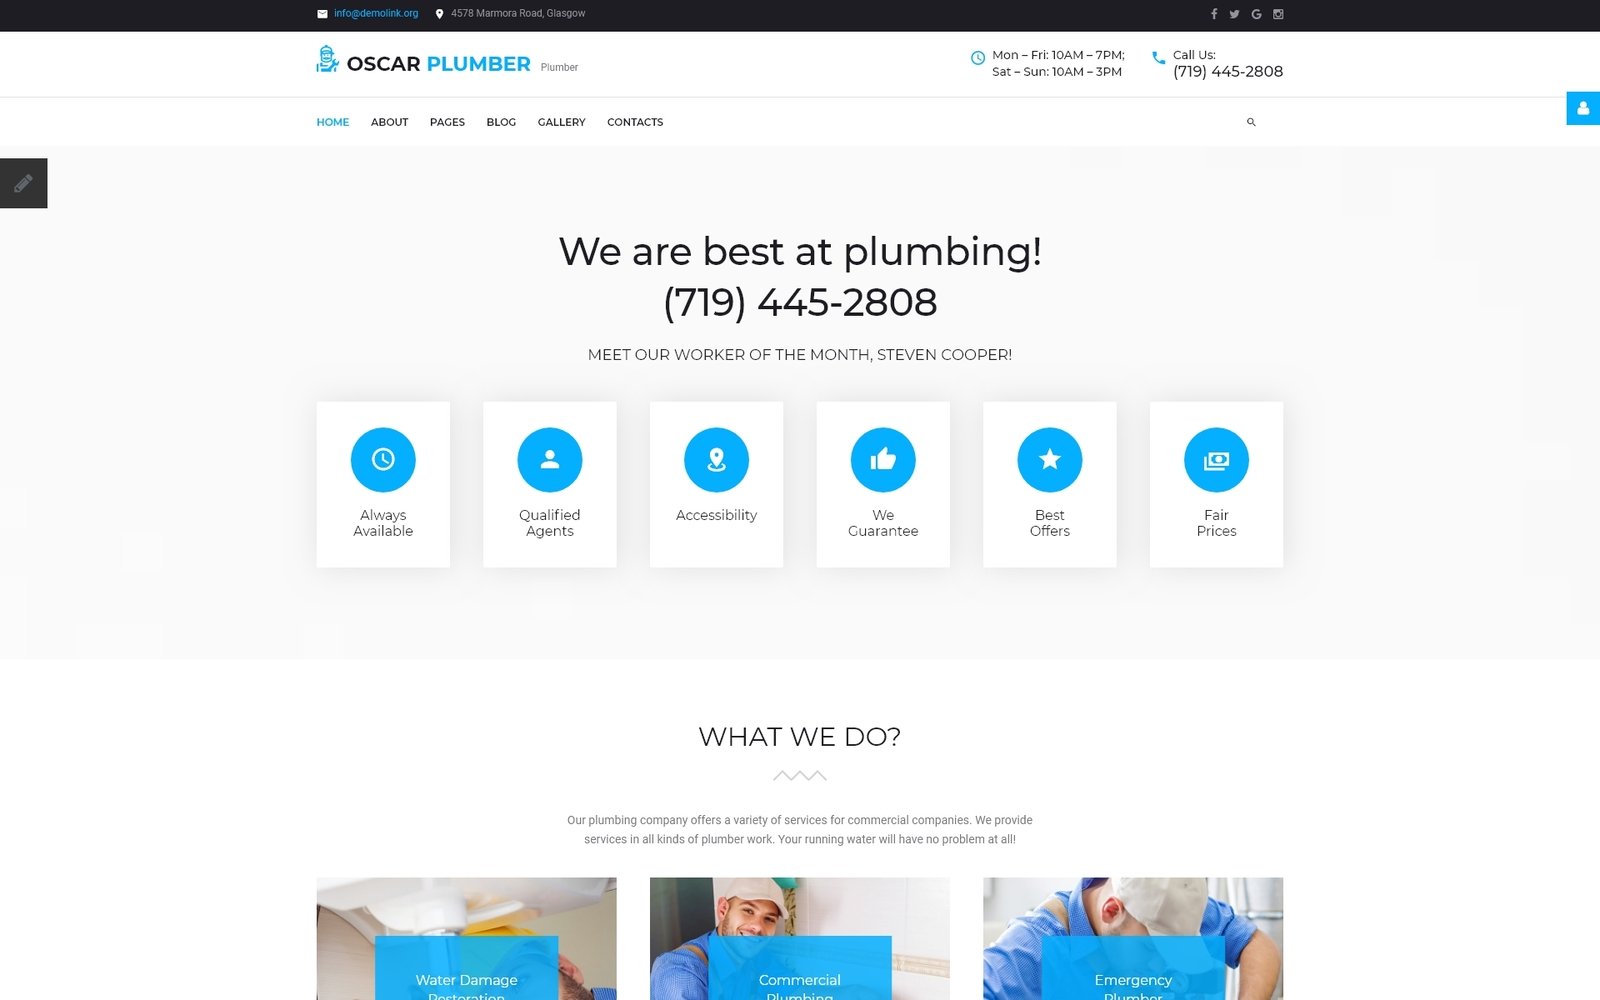 Oscar Plumber - Plumbing Services Joomla Template